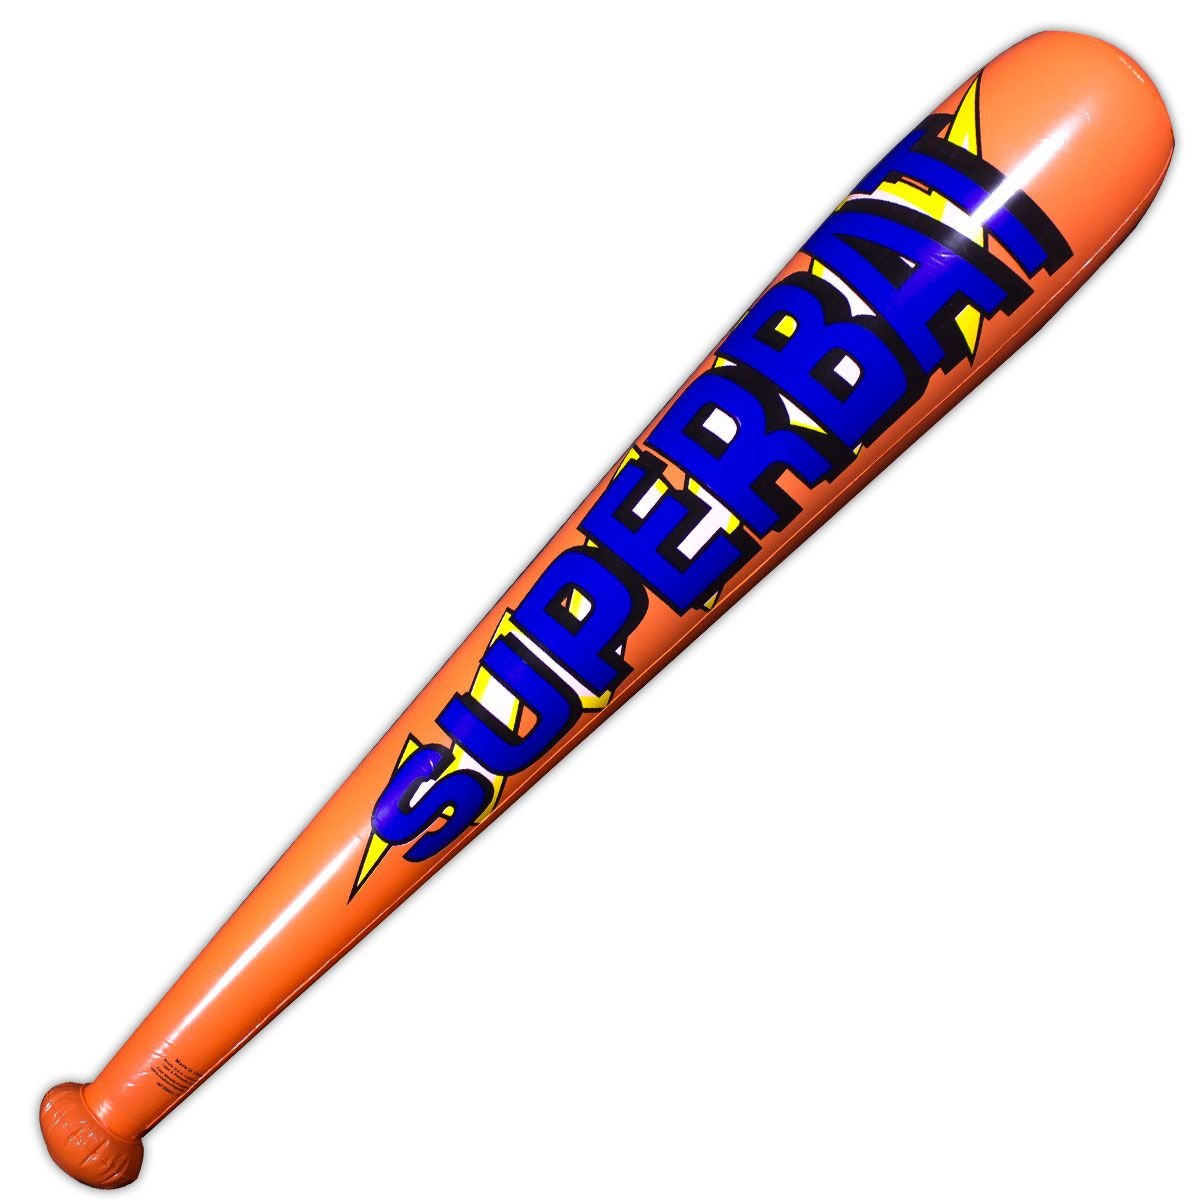 NEW Inflatable Baseball Bats  Black or Orange  One Dozen FREE SHIPPING 